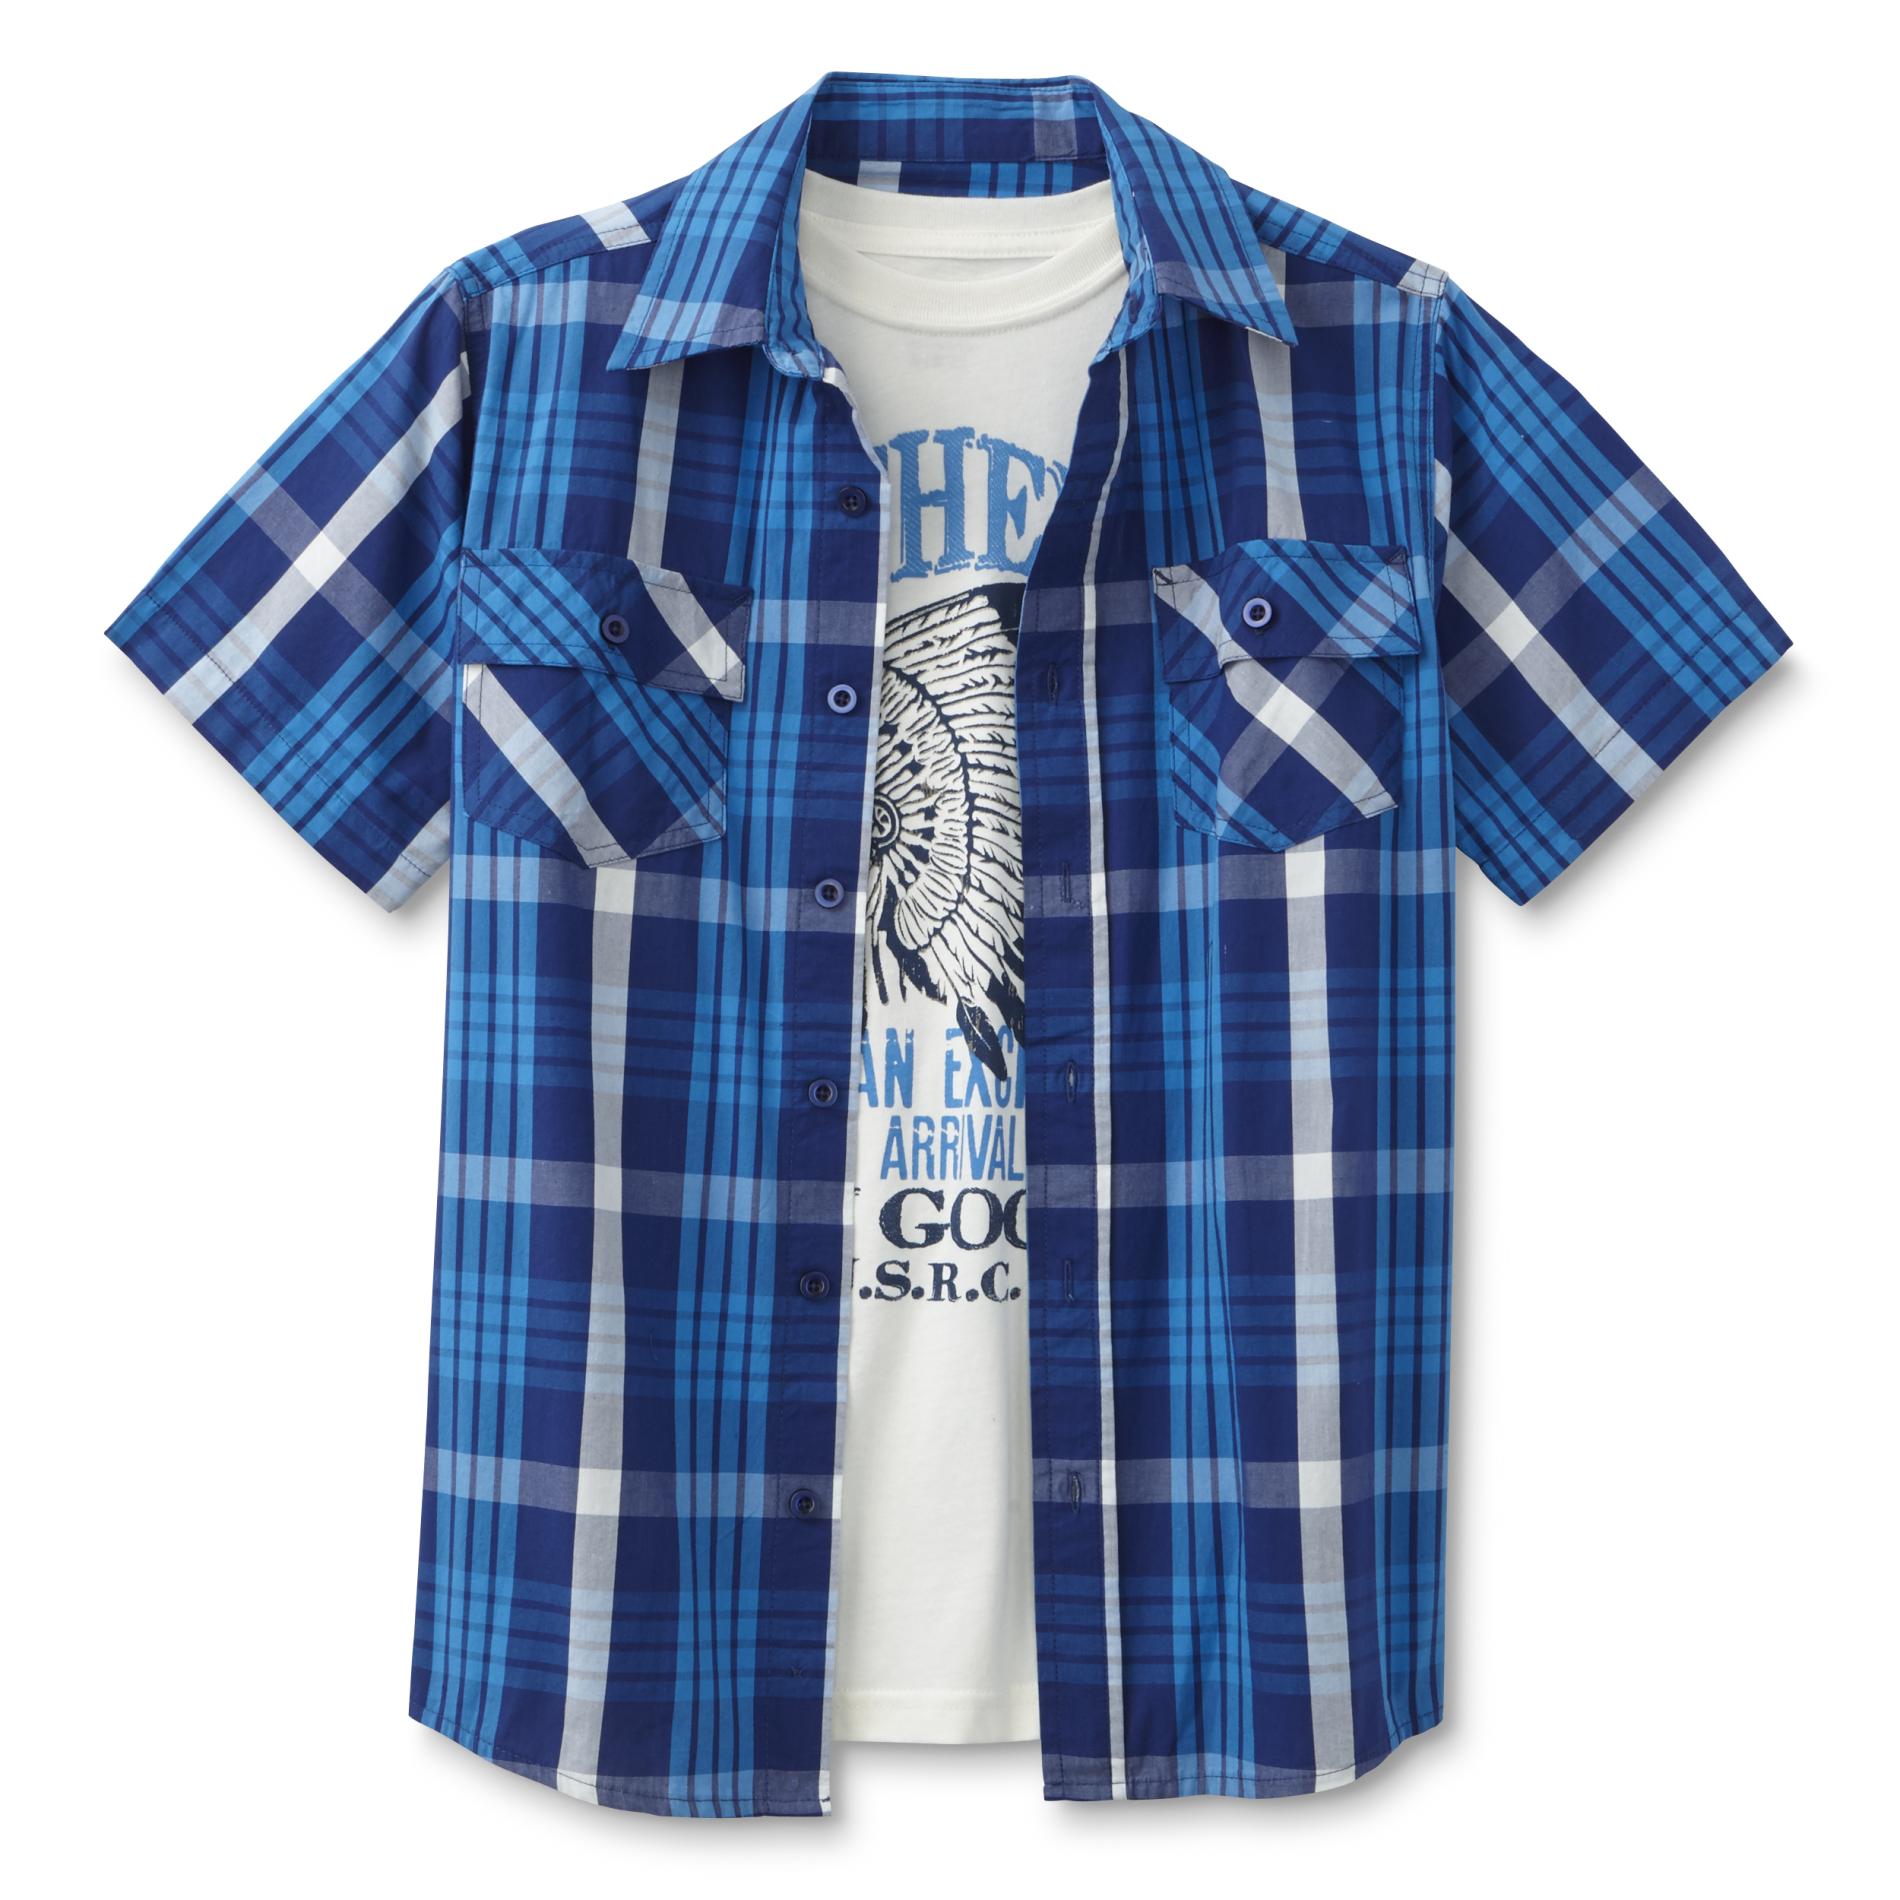 Roebuck & Co. Boy's Graphic T-Shirt & Button Front Shirt - Plaid